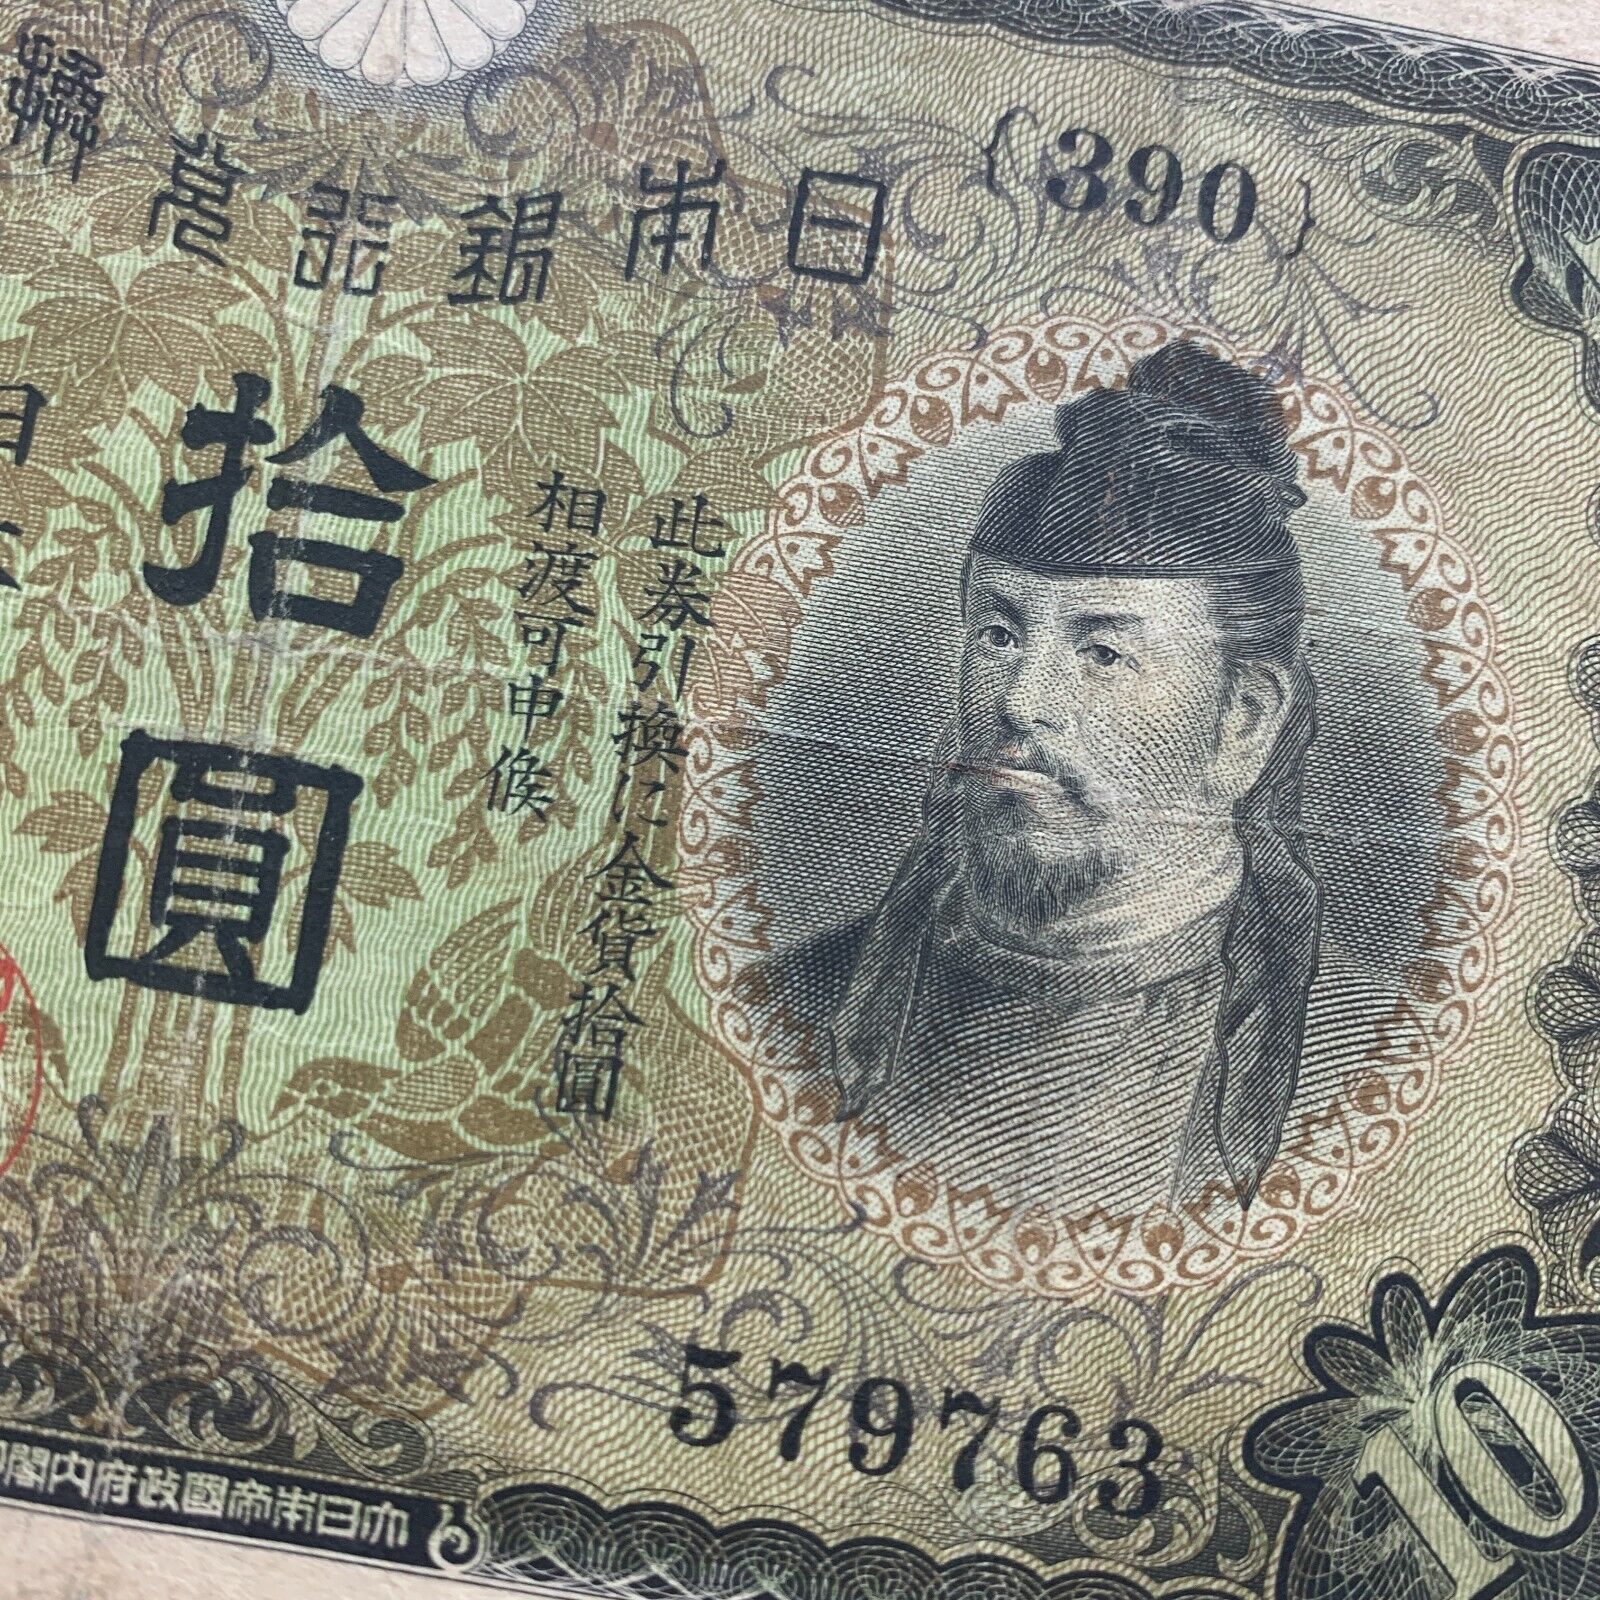 Japan 10 Yen Banknote Pre WW2 WWII 1930 Currency Paper Money Japanese Vintage